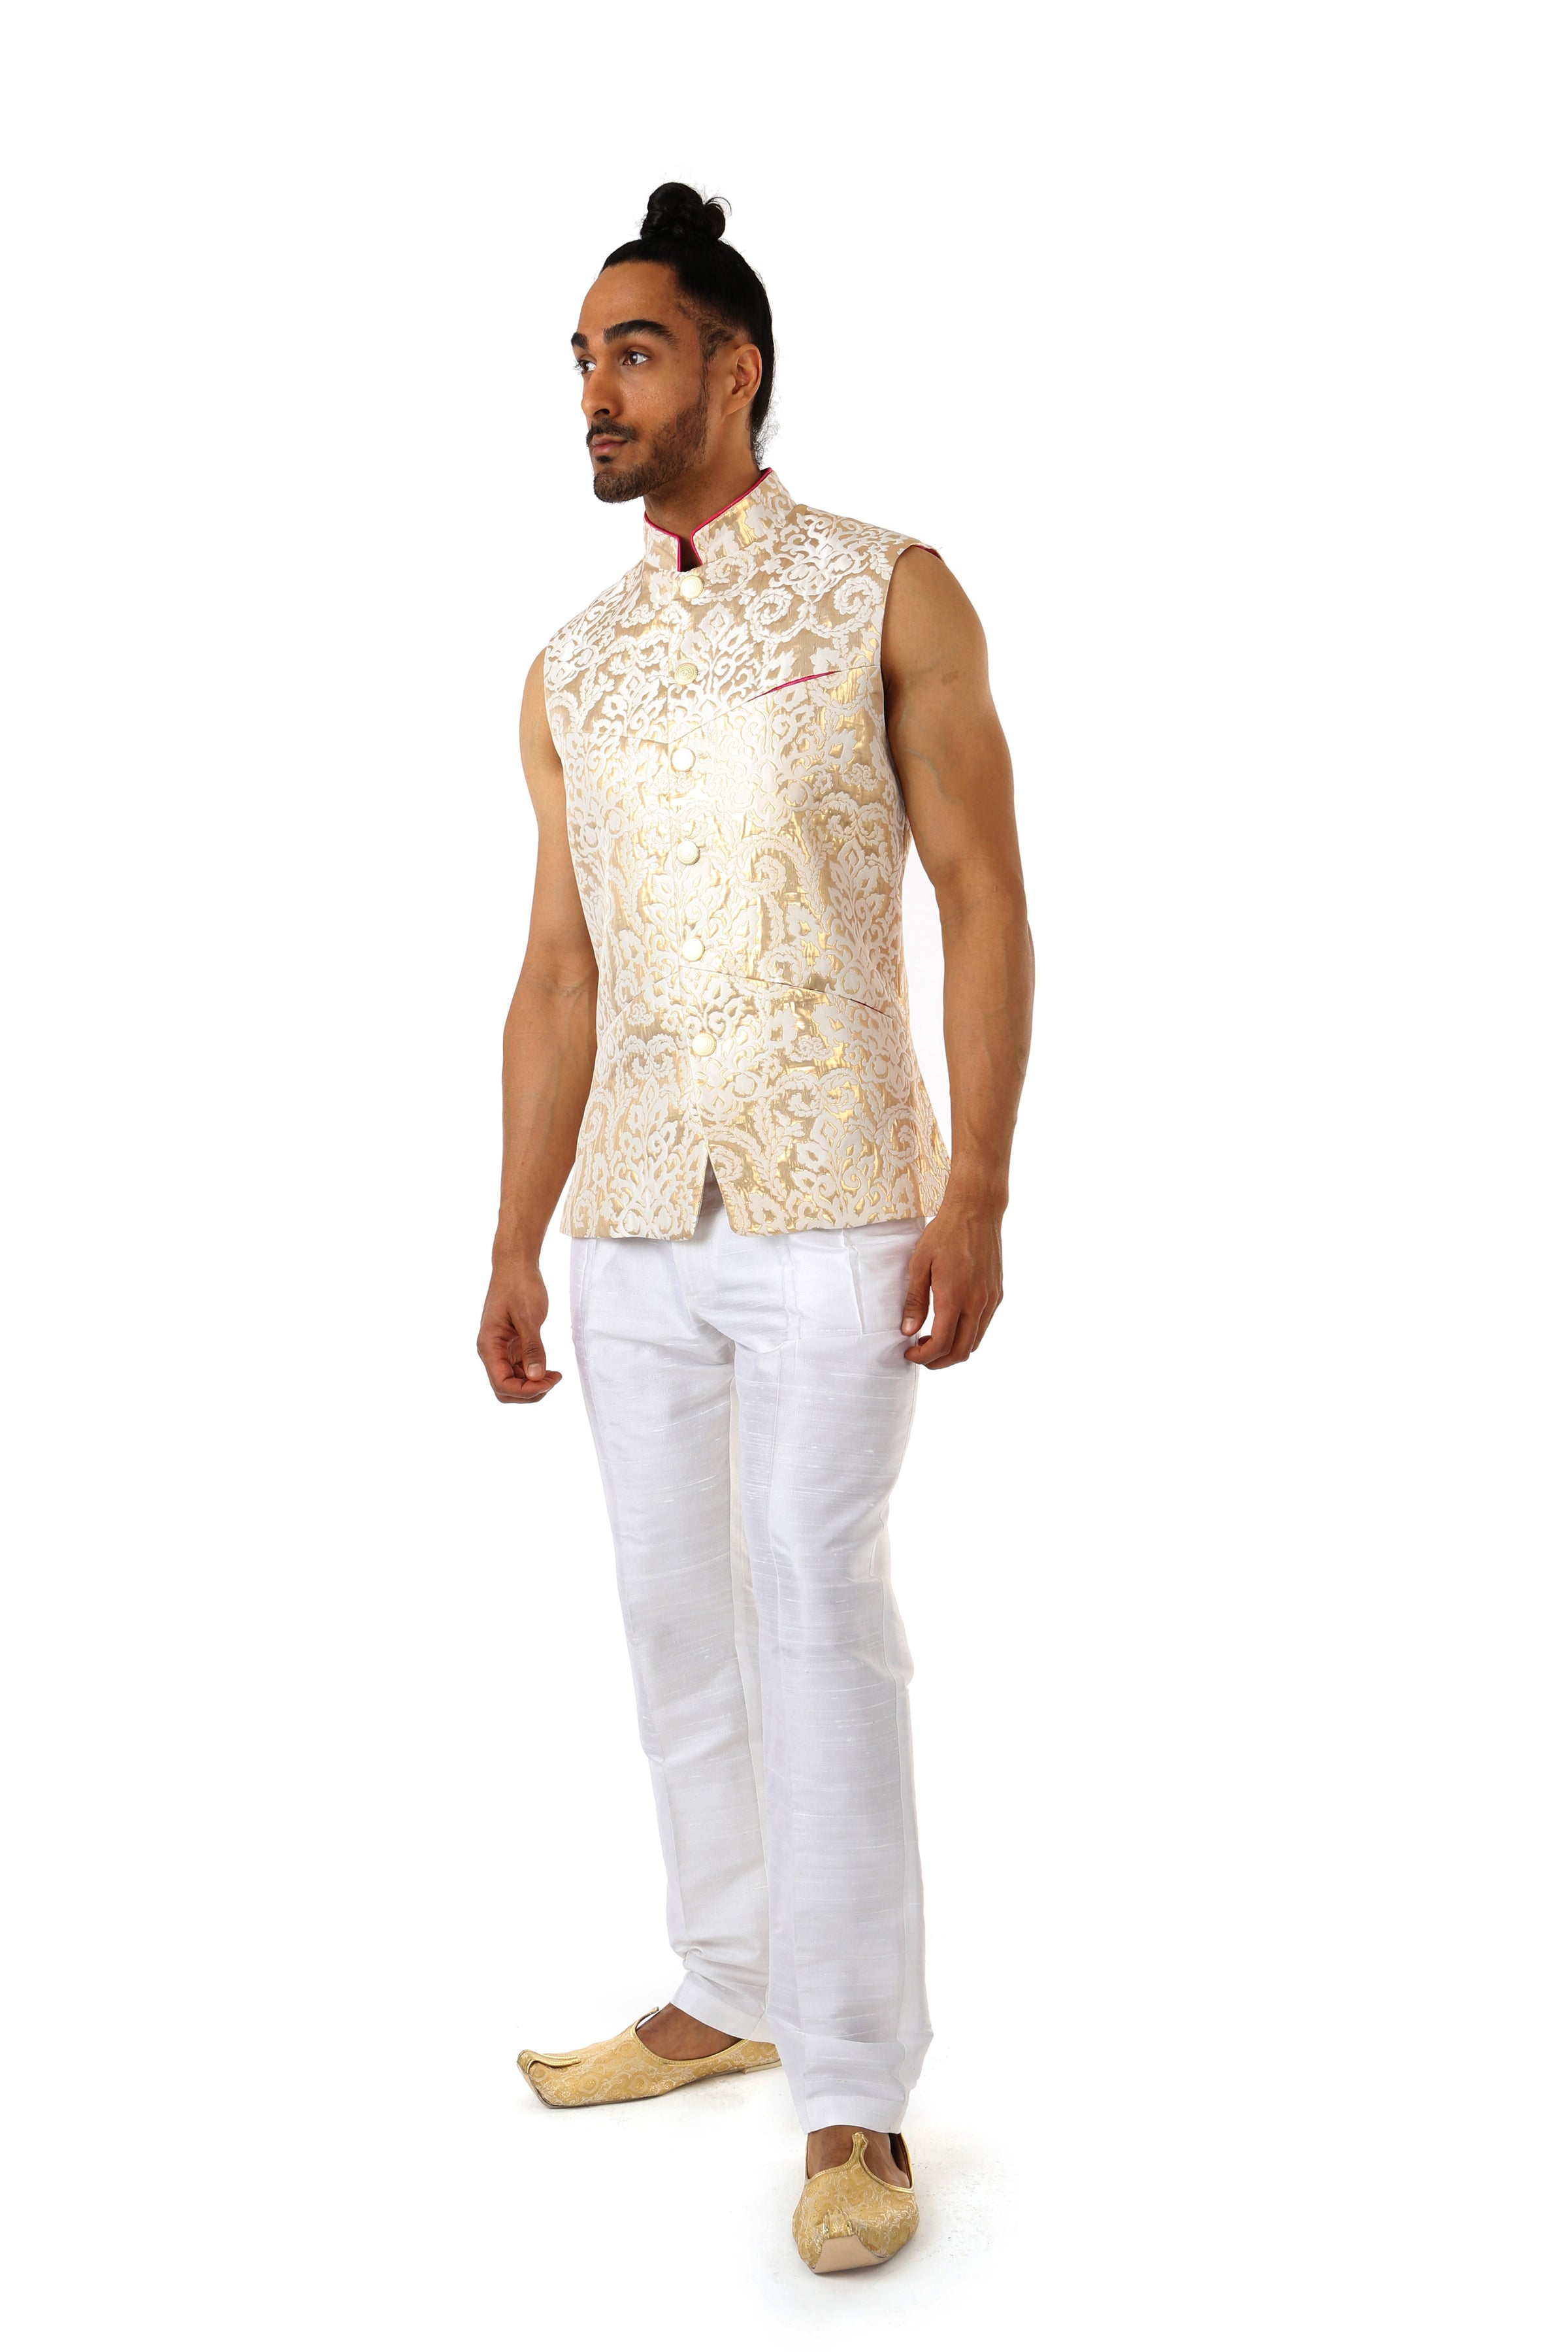 Harleen Kaur ARJUN Gold Vest with Piped Mandarin Collar - Side View